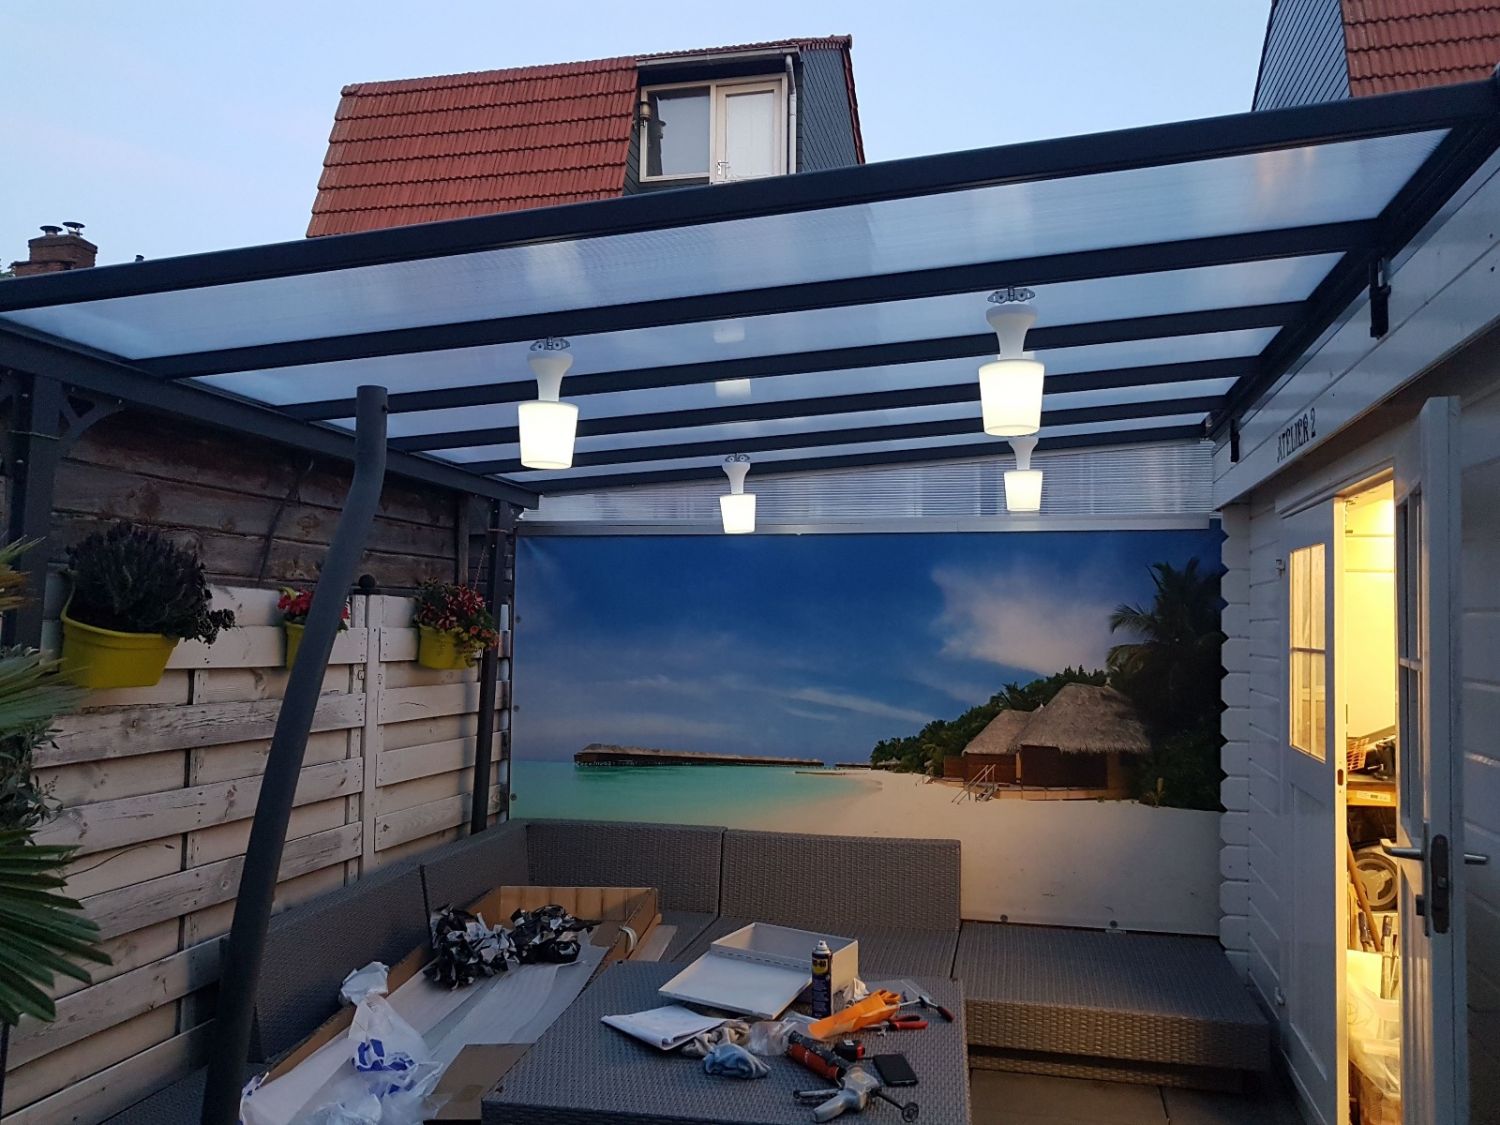 Terrasoverkapping Livingdream 314x305 cm Antraciet - Delft